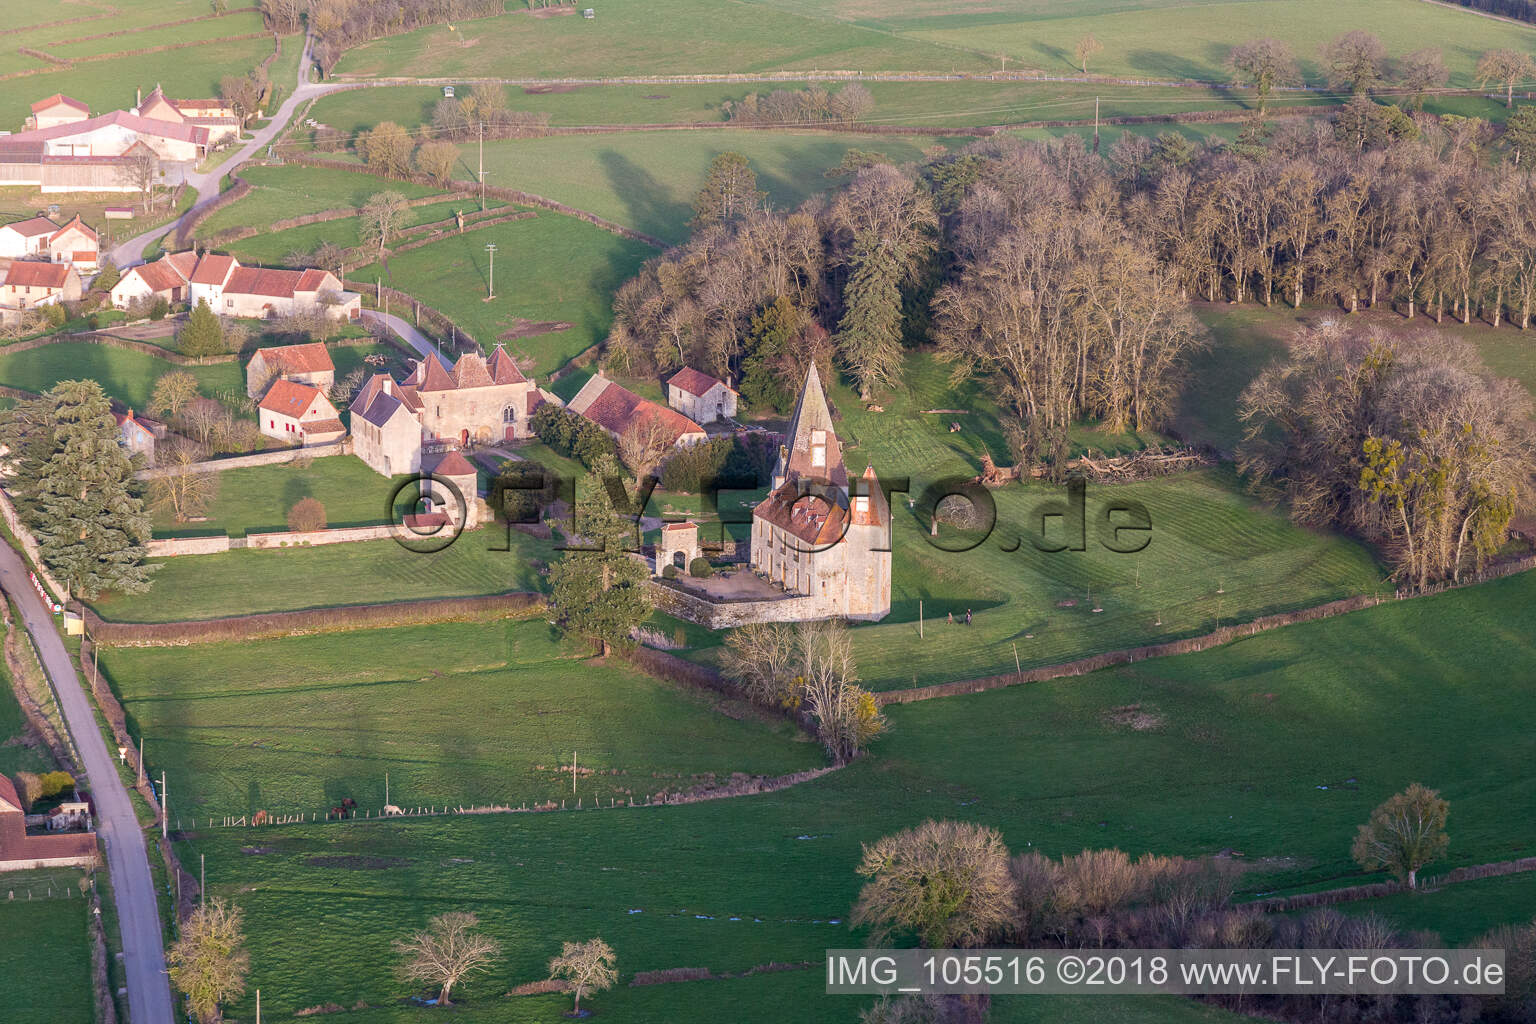 Château de Morlet in Burgundy in Morlet in the state Saone et Loire, France